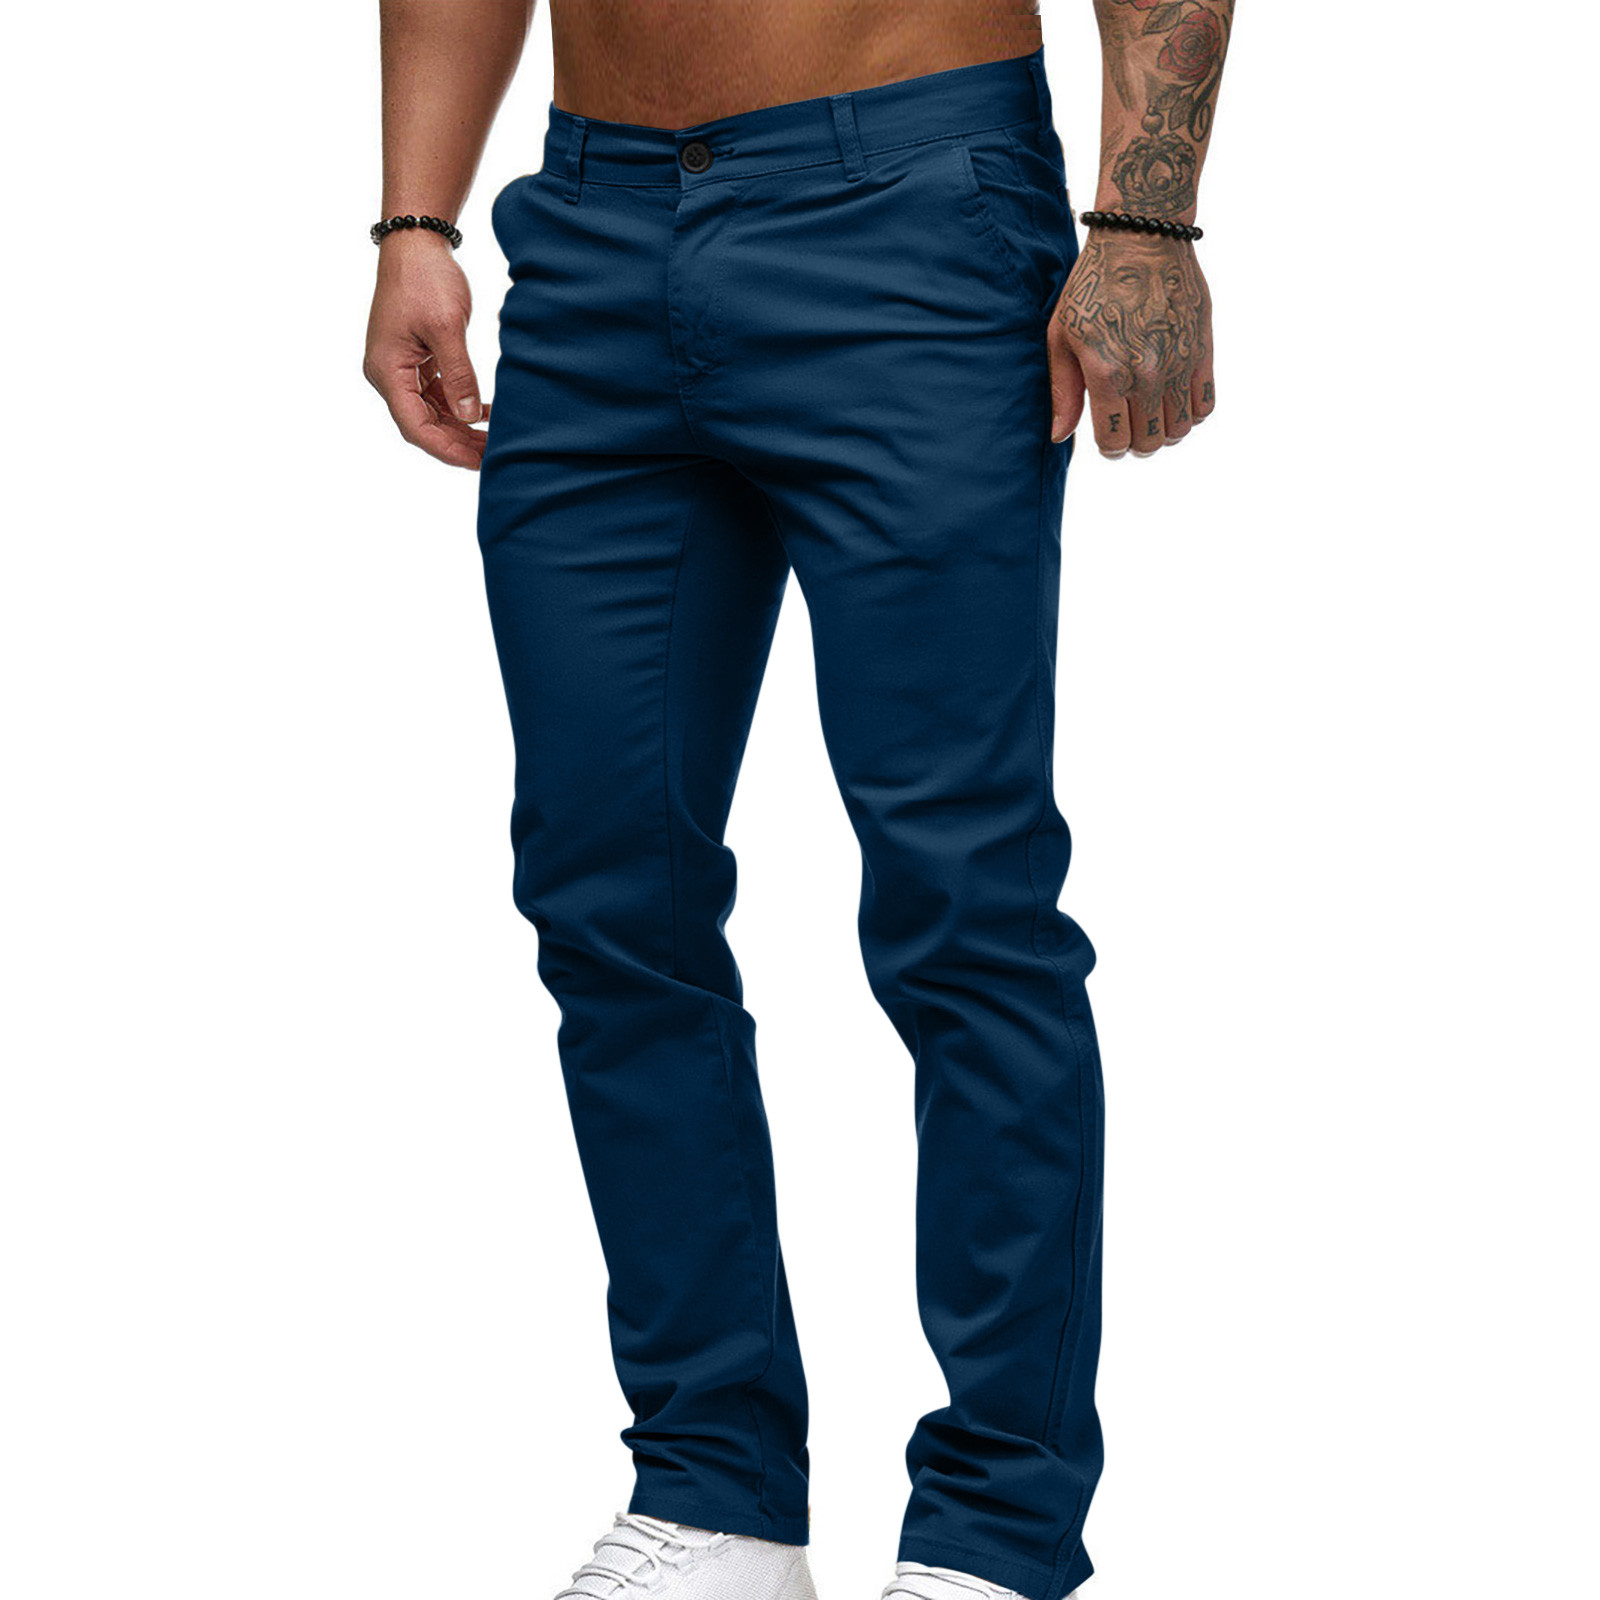 DeHolifer Mens Casual Chinos Pants Cotton Slacks Elastic Waistband Classic Fit Flat Front Khaki Pant Navy L - image 2 of 5